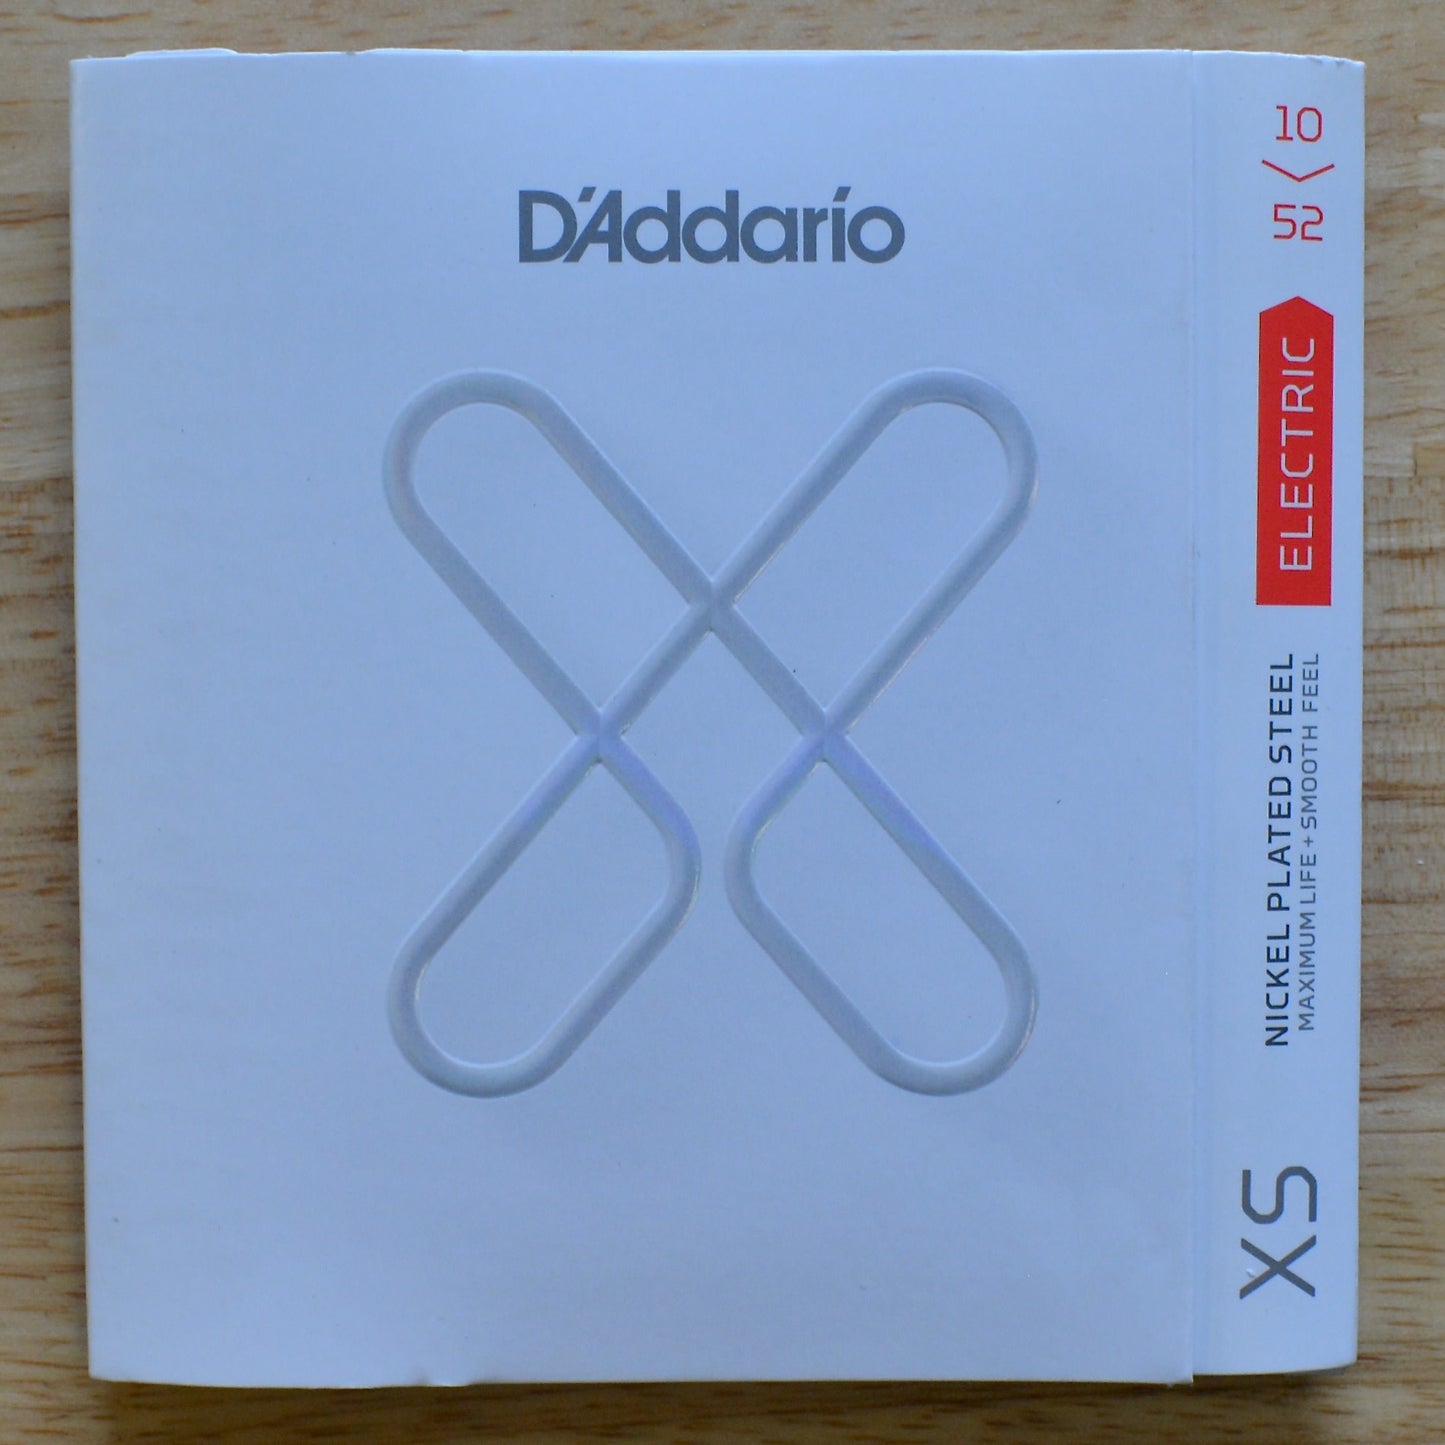 D'Addario XS Nickel Electic Strings Super LT TOP/HVY BTM 10-52